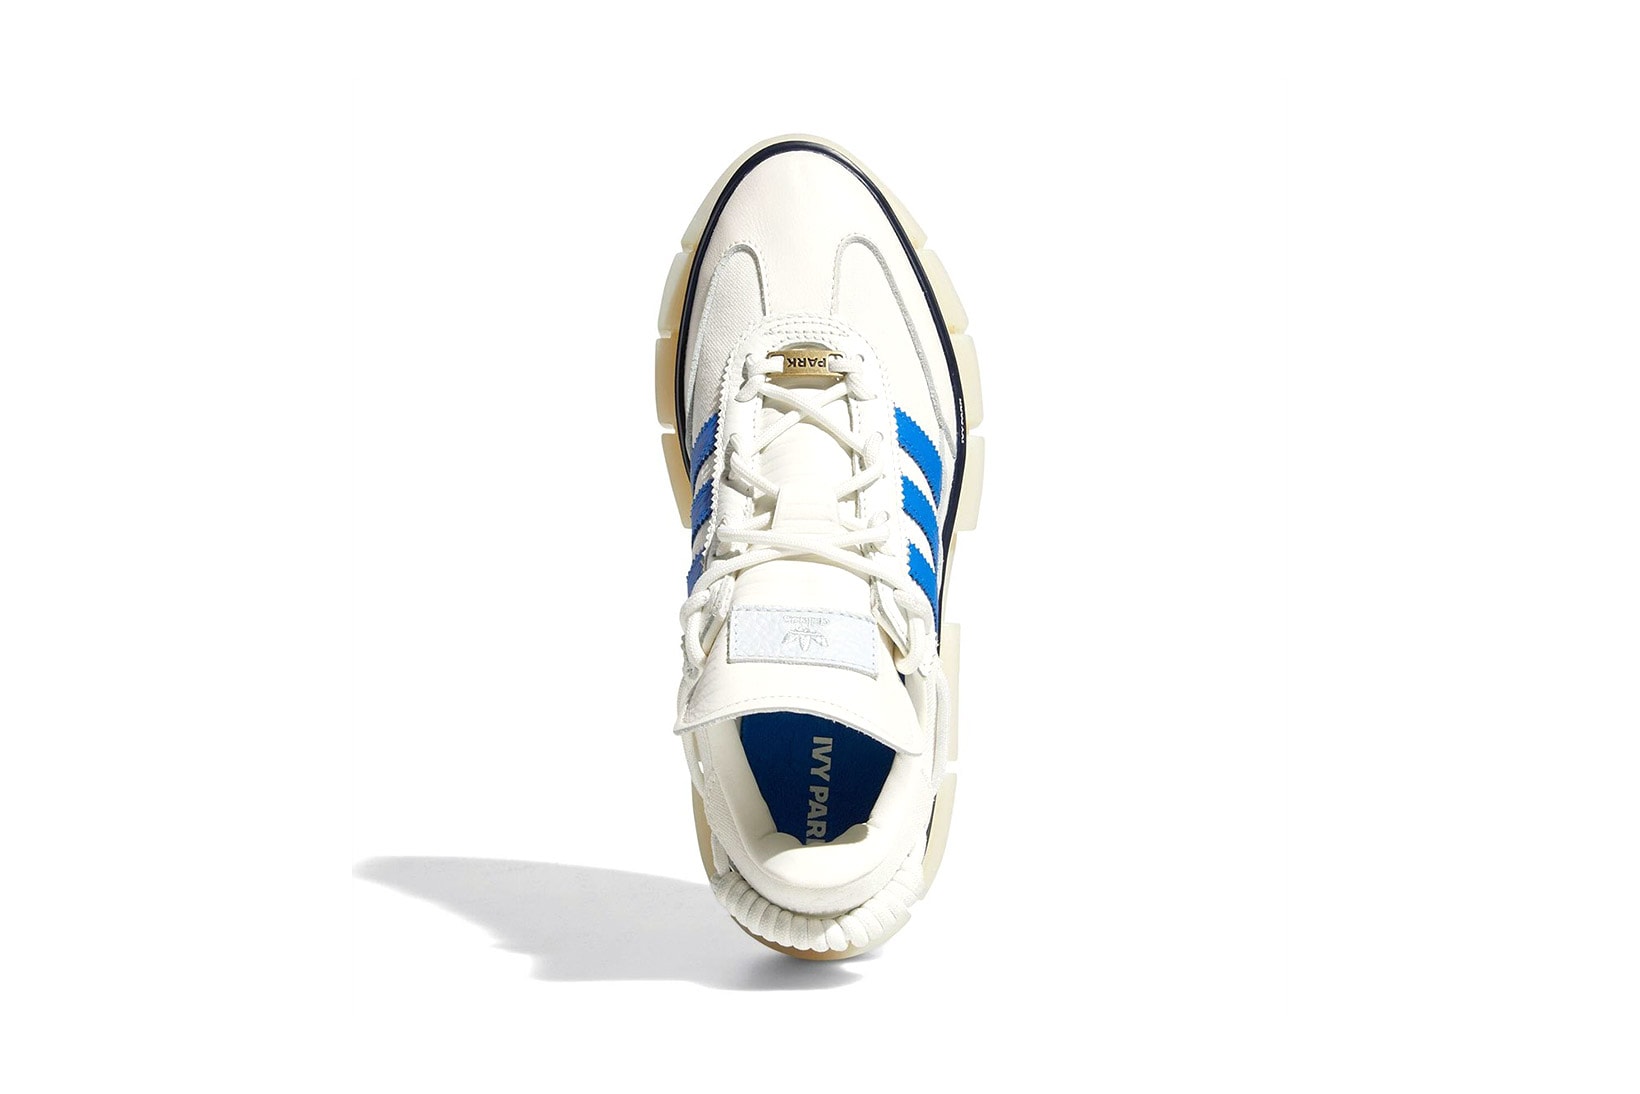 Beyonce IVY PARK adidas Originals Super Super Sleek Sneakers Collaboration Shoes Kicks Footwear White Blue